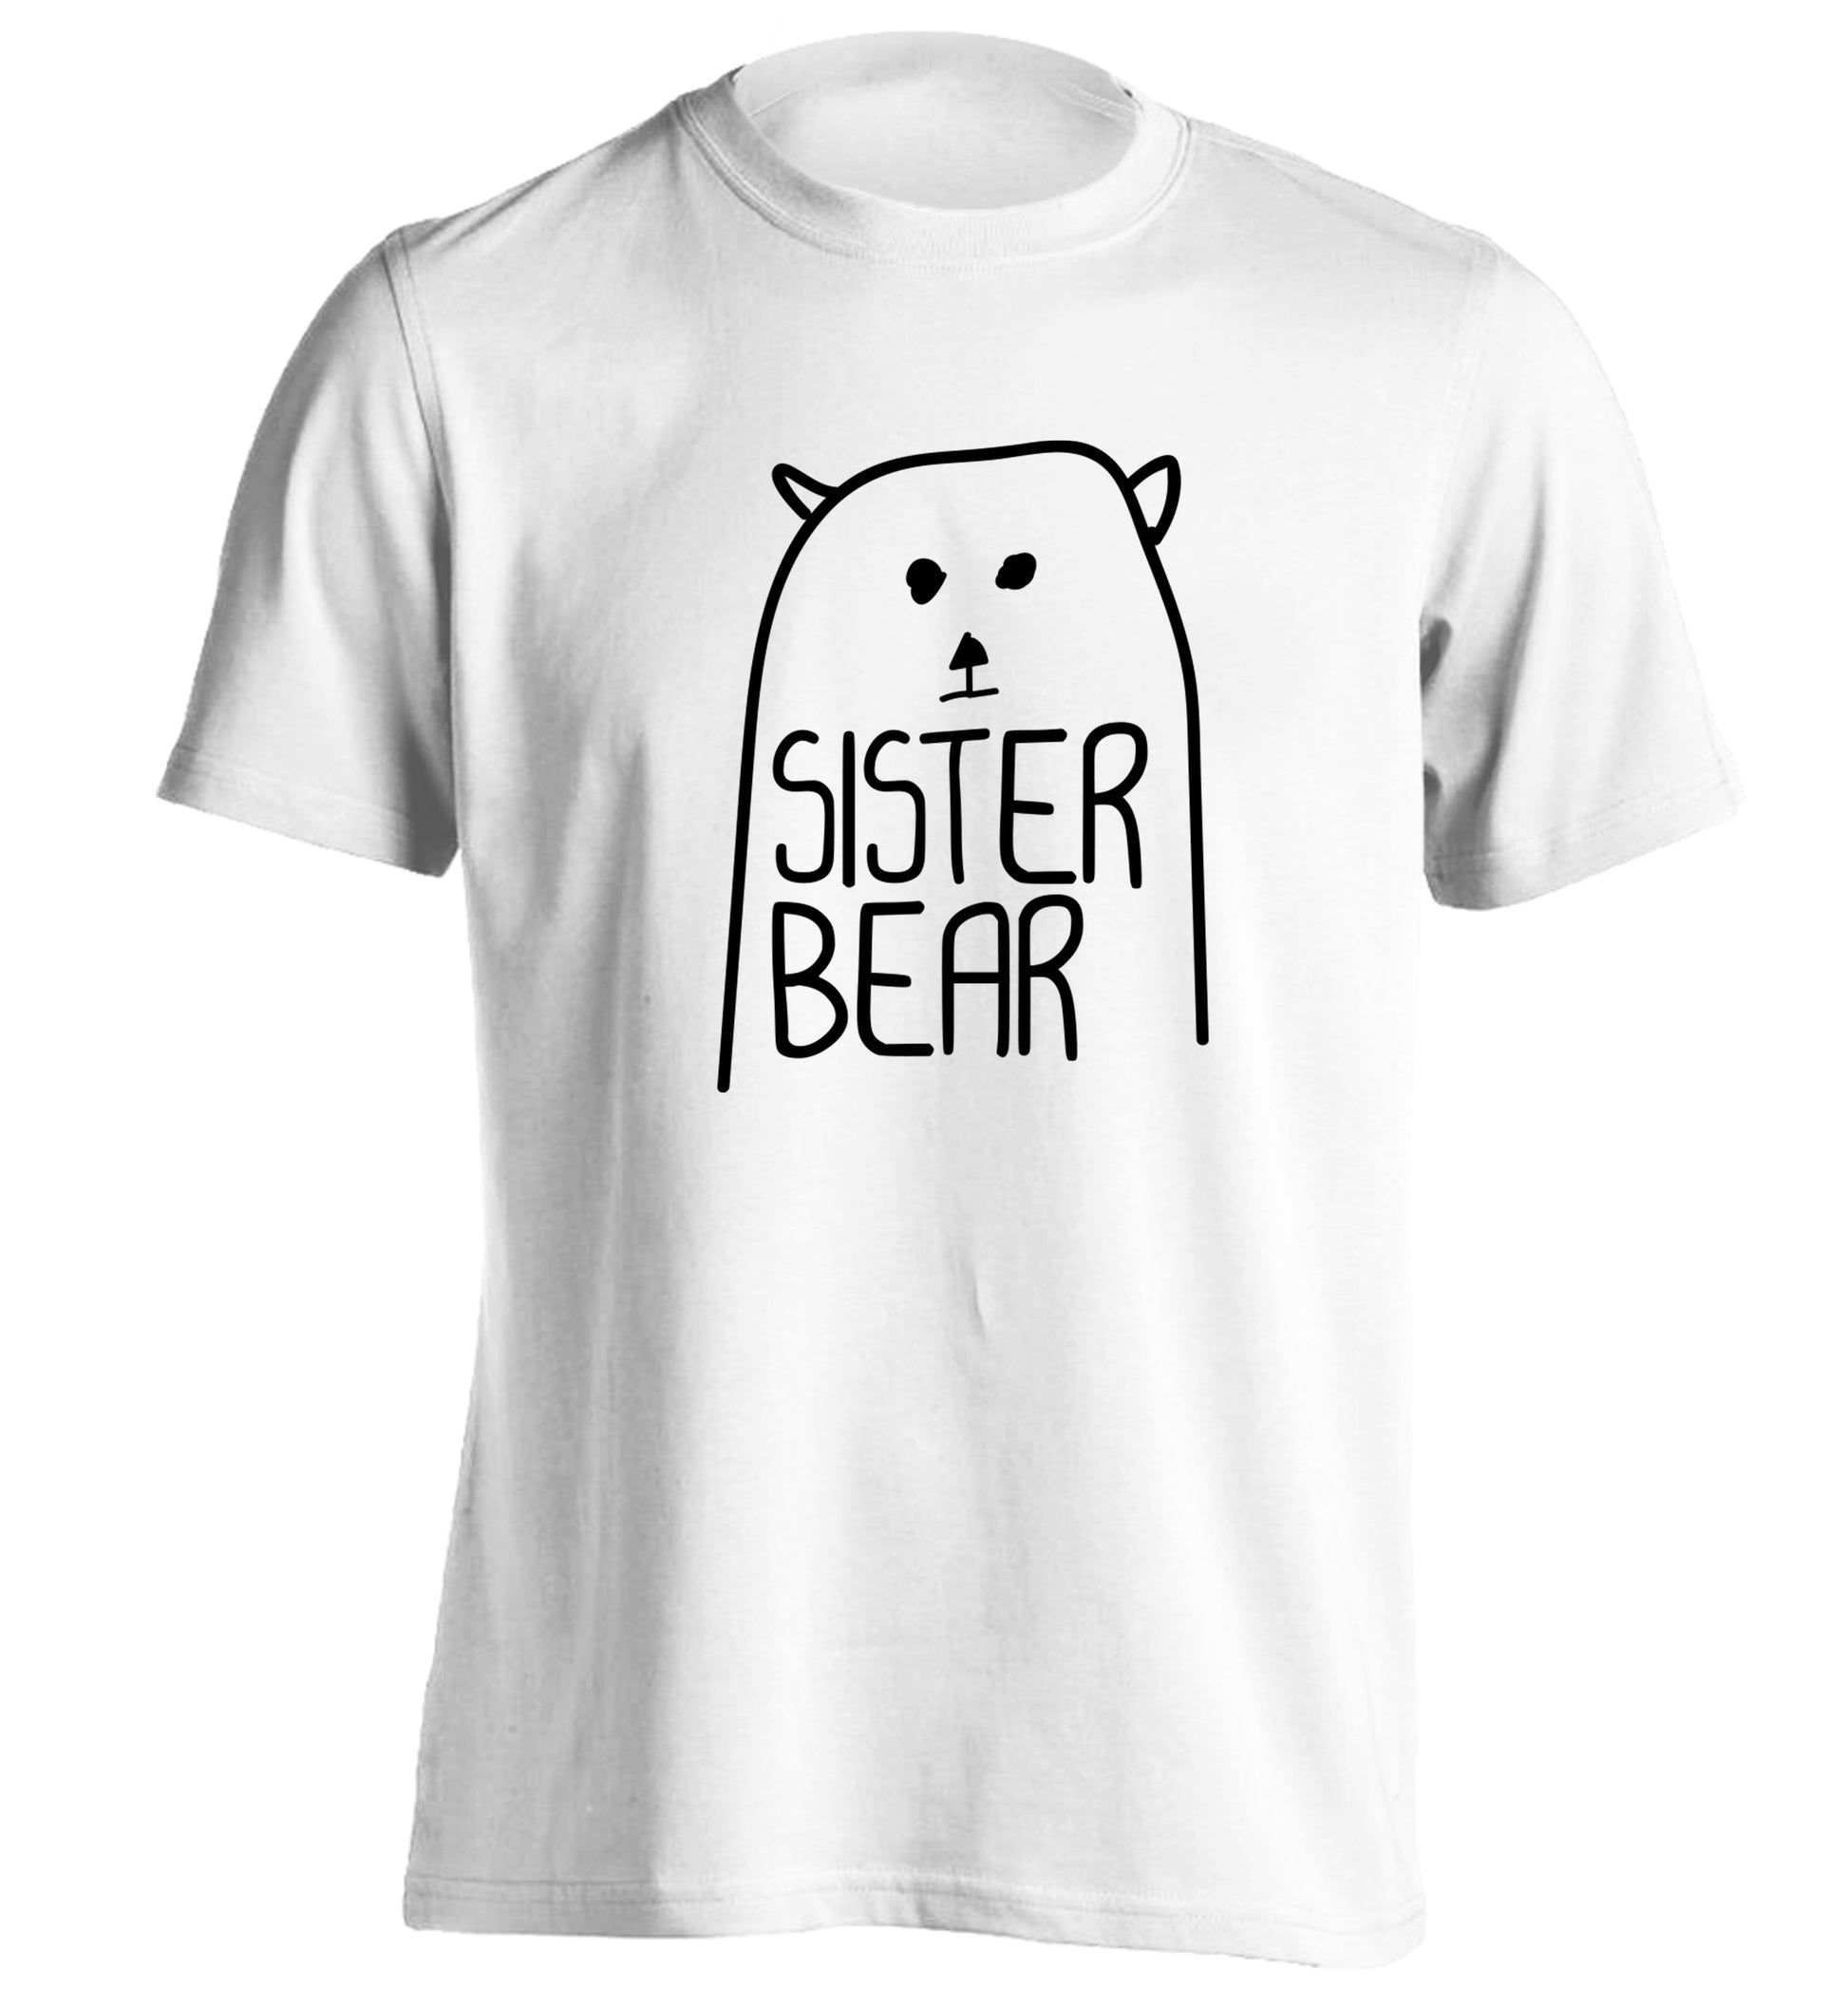 Sister bear adults unisex white Tshirt 2XL